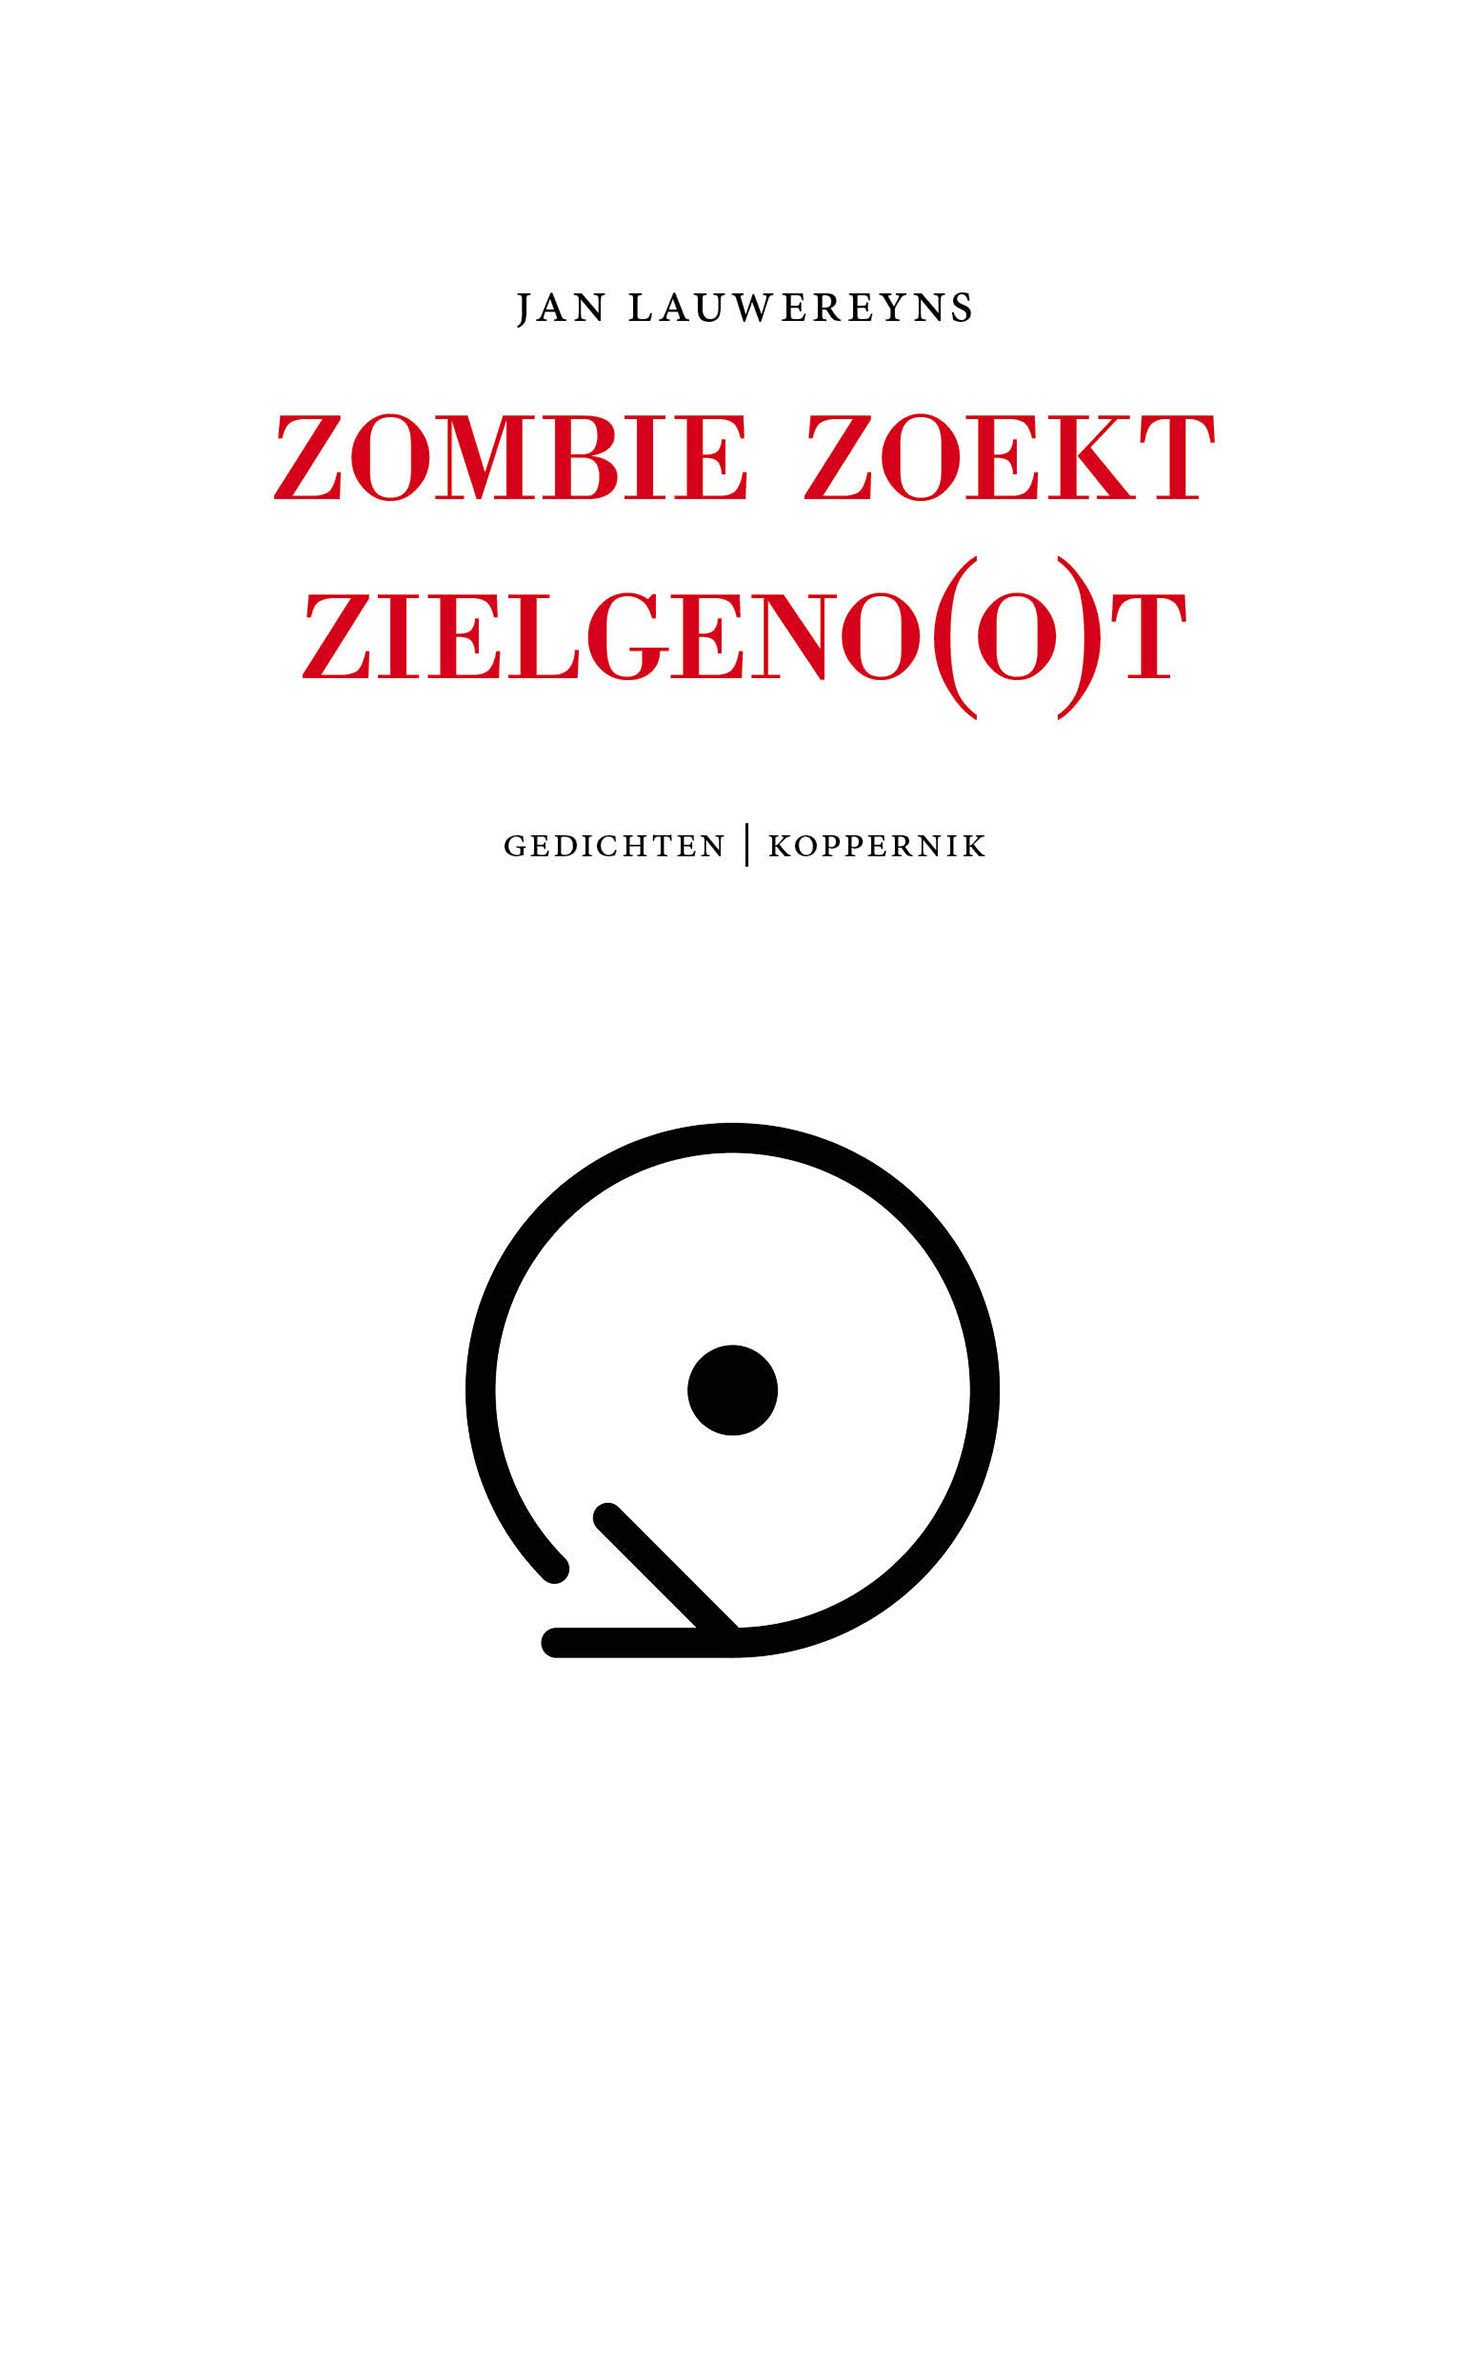 Zombie zoekt zielgeno(o)t – Jan Lauwereyns